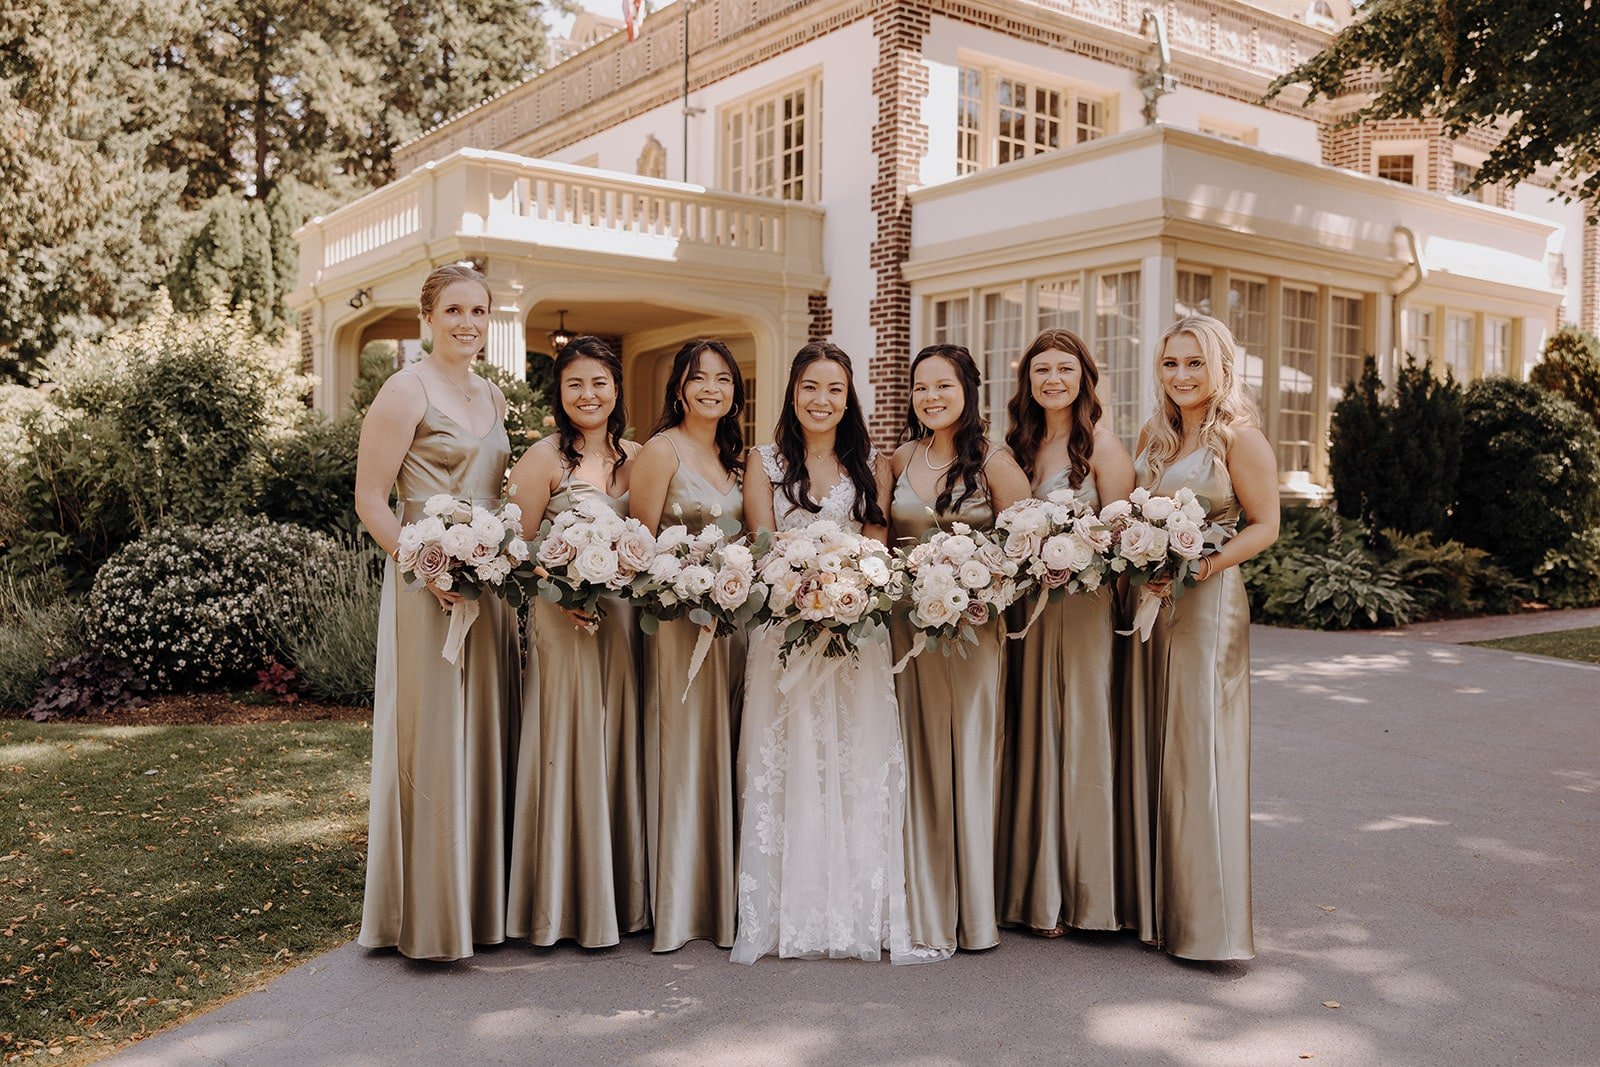 Bridal party photos at Lairmont Manor wedding in Washington